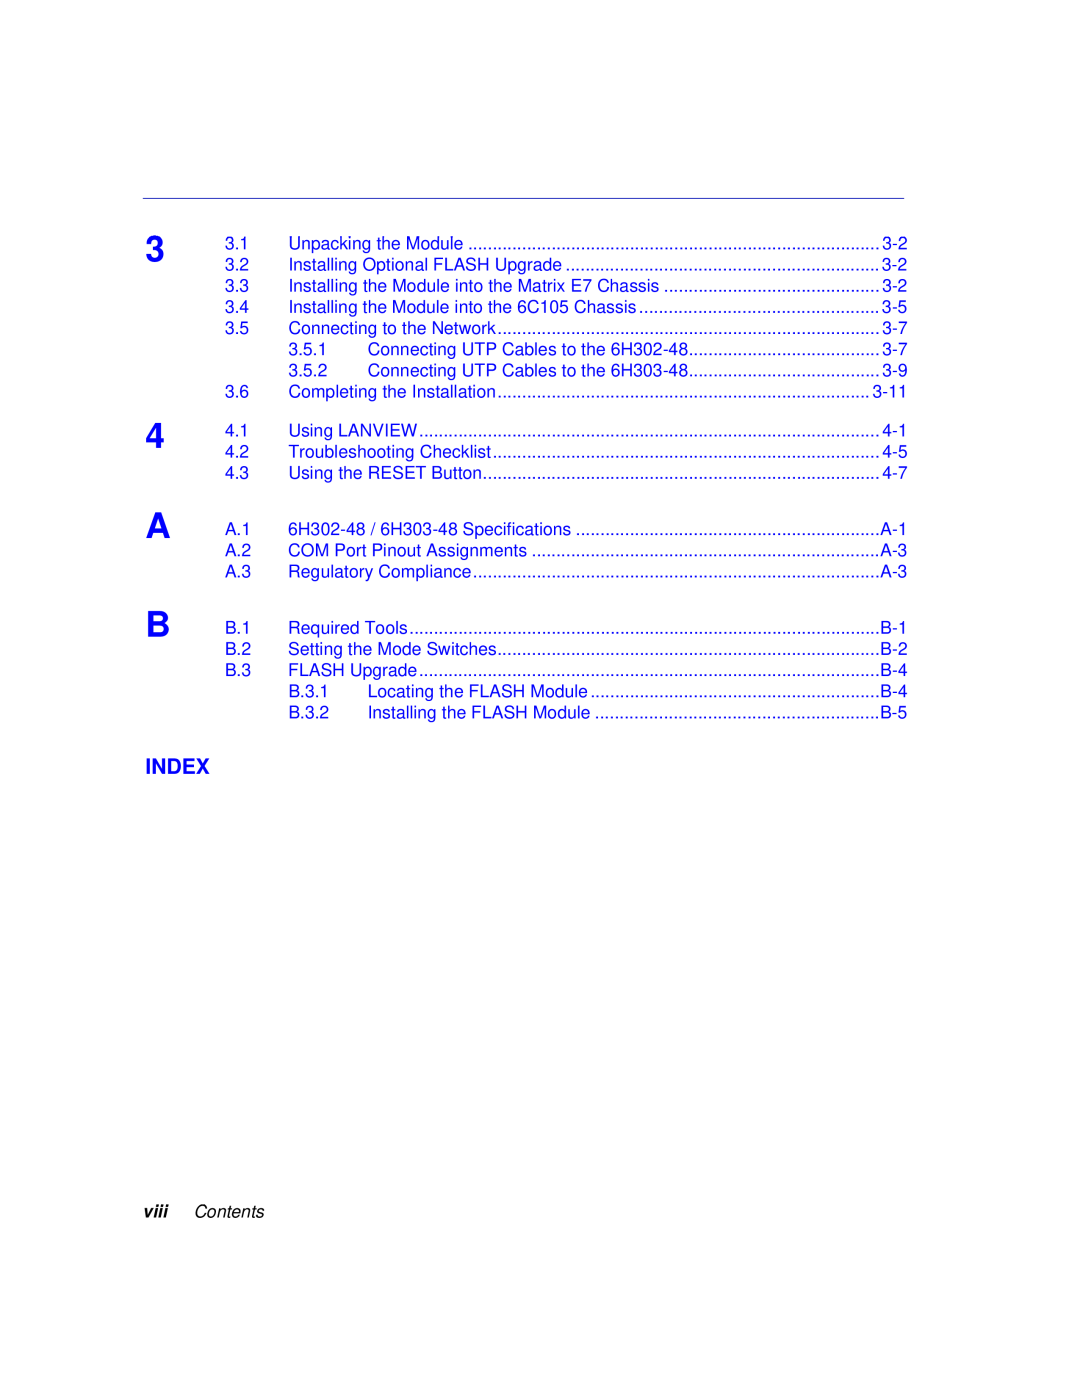 Enterasys Networks 6H302-48 manual Index, viii Contents 